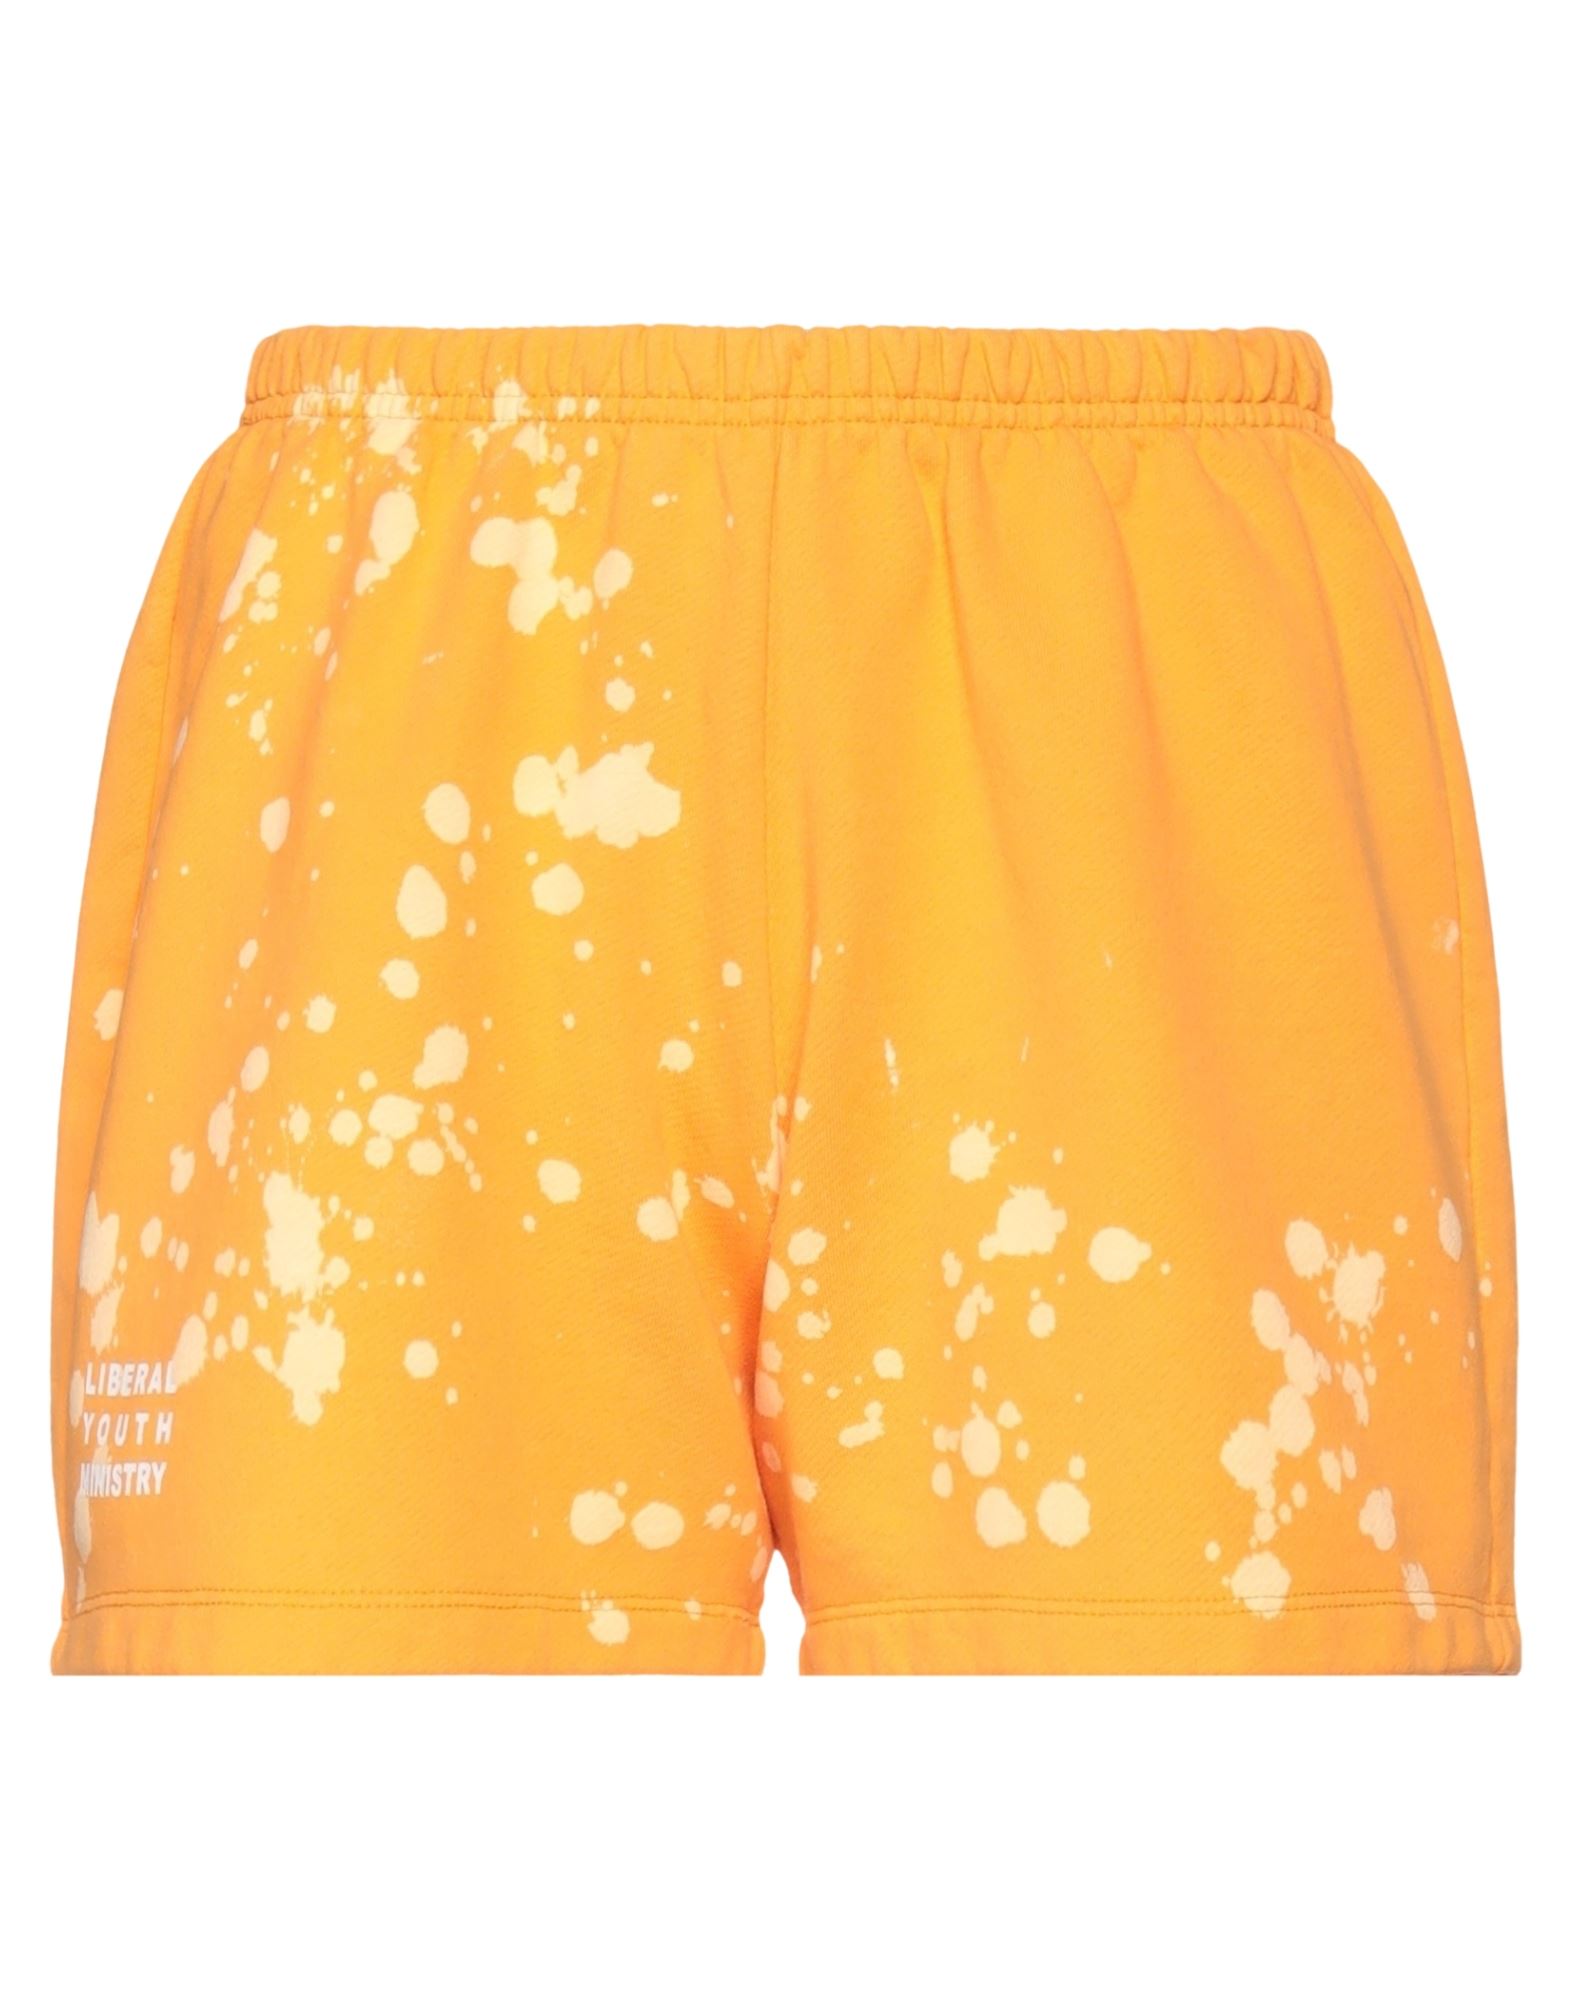 Liberal Youth Ministry Woman Shorts & Bermuda Shorts Orange Size M Cotton